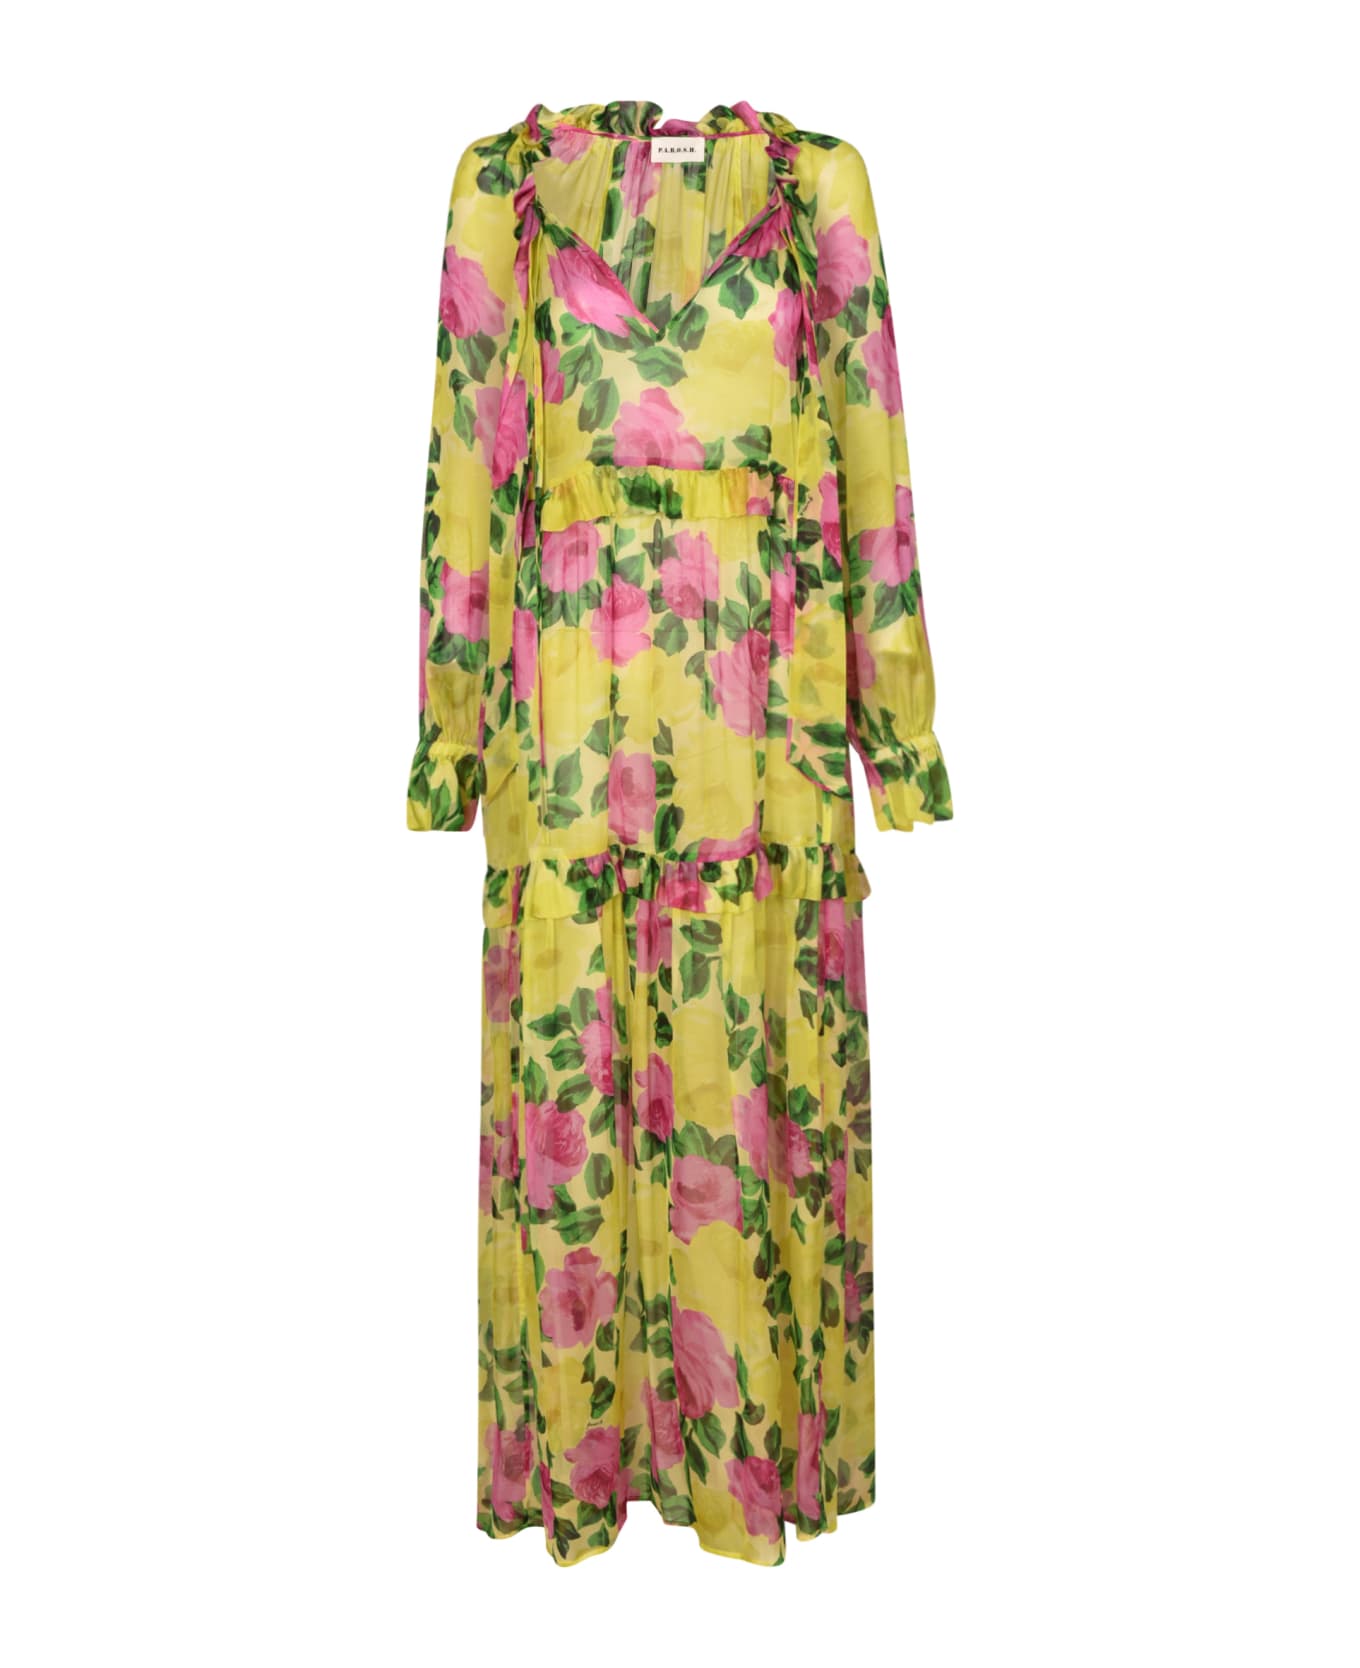 Parosh Floral Printed Long Dress - Fantasia gialla